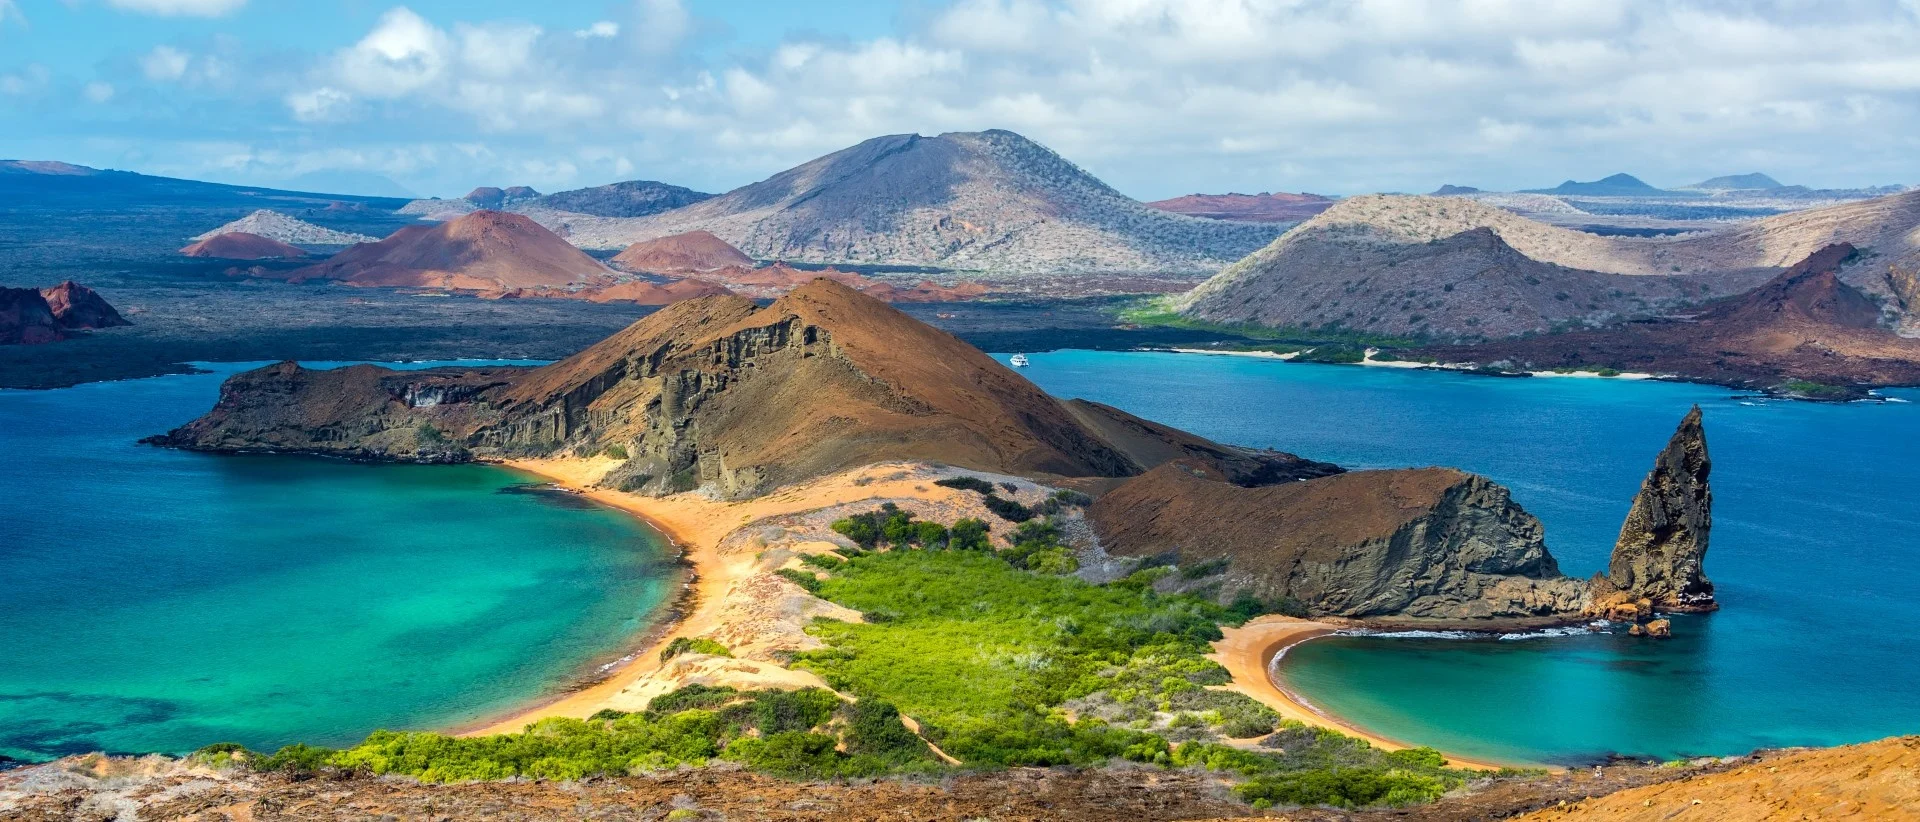 Beautiful view of Bartolome Island, Galápagos, Ecuador. Credit: DC Colombia - Getty Images / Hurtigruten